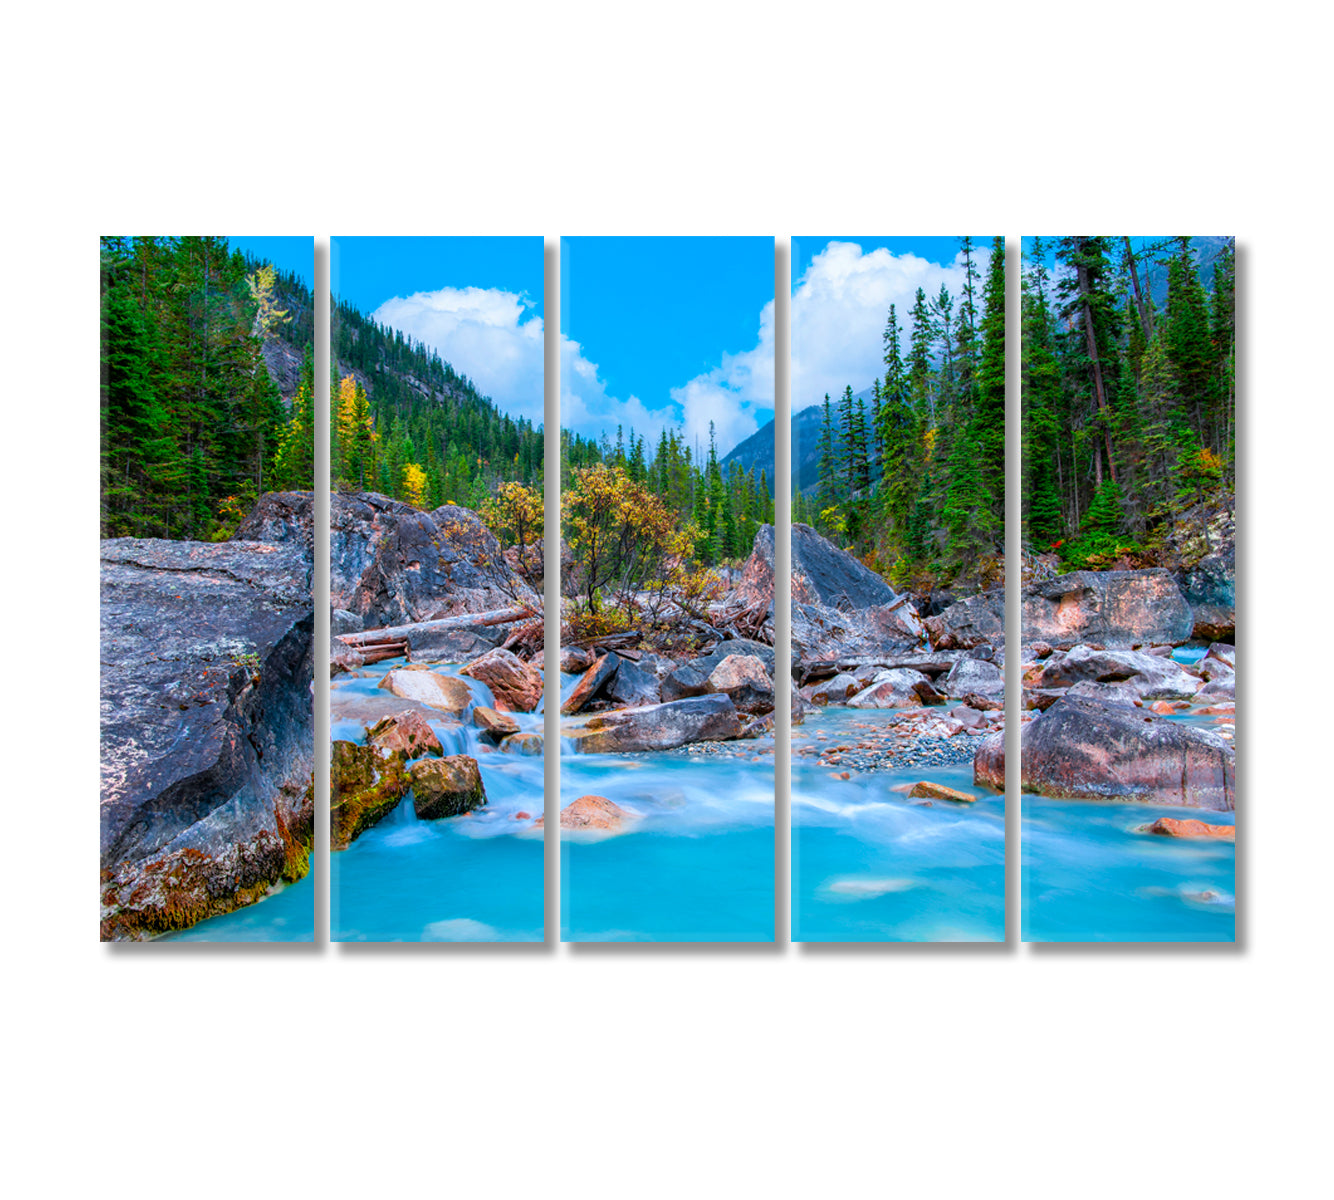 Kicking Horse River Waterfalls Banff Alberta Canada Canvas Print-Canvas Print-CetArt-5 Panels-36x24 inches-CetArt